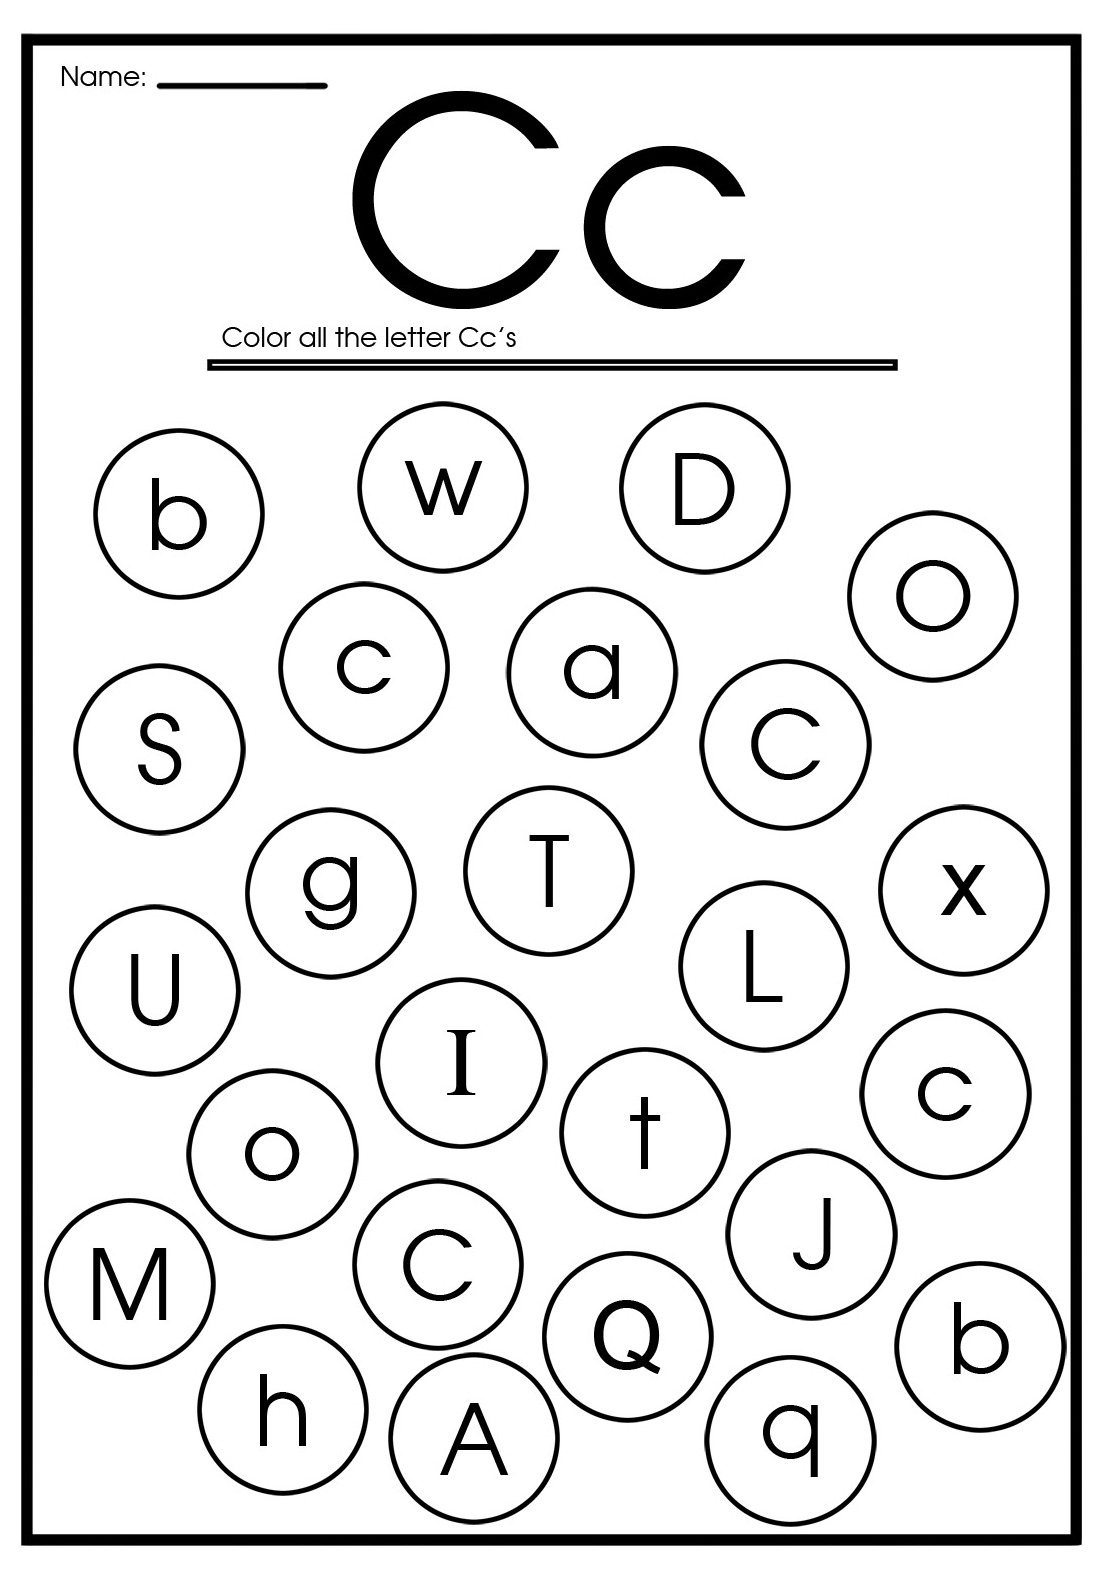 printable-letter-c-worksheets-for-kindergarten-preschoolers-49-best-images-about-preschool-at